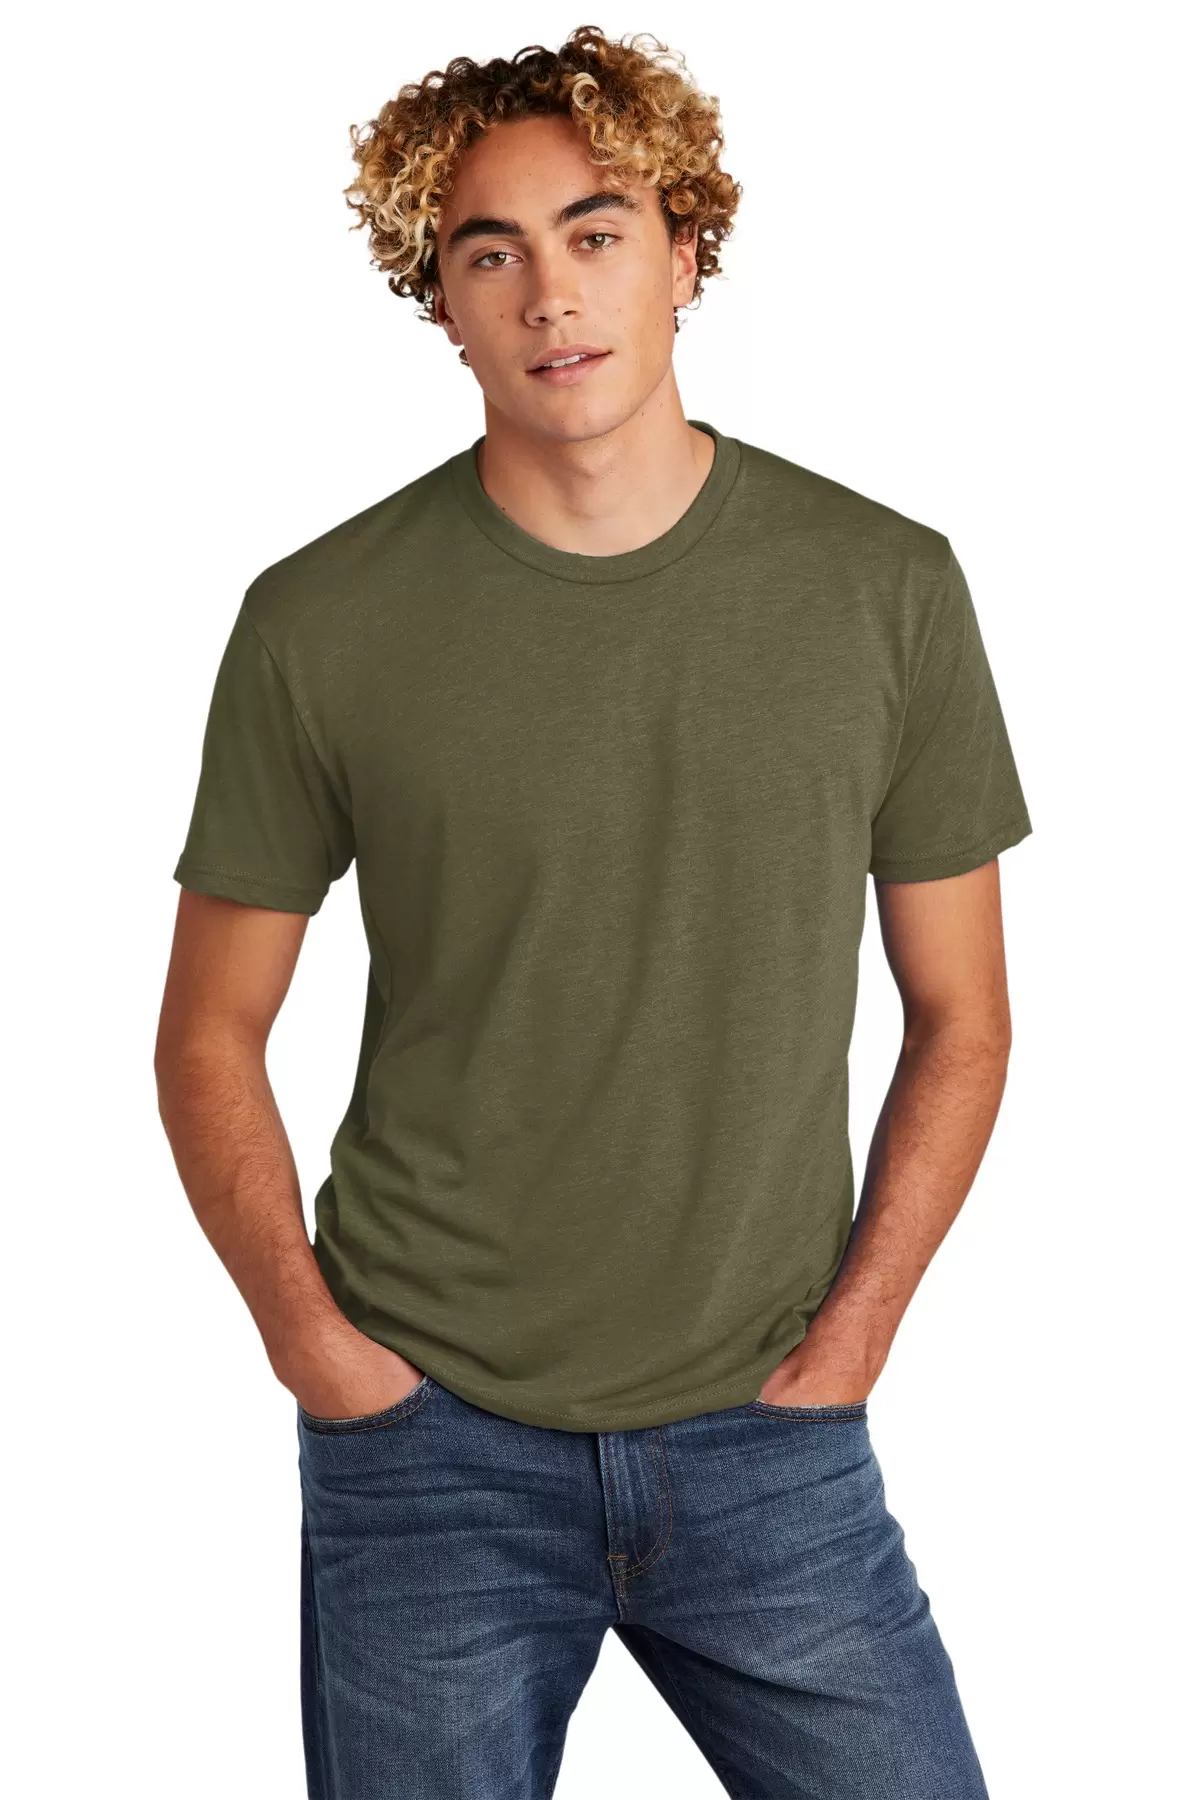 Next Level 6010 | Next Level Tri-Blend T-Shirt | Blankstyle Military ...